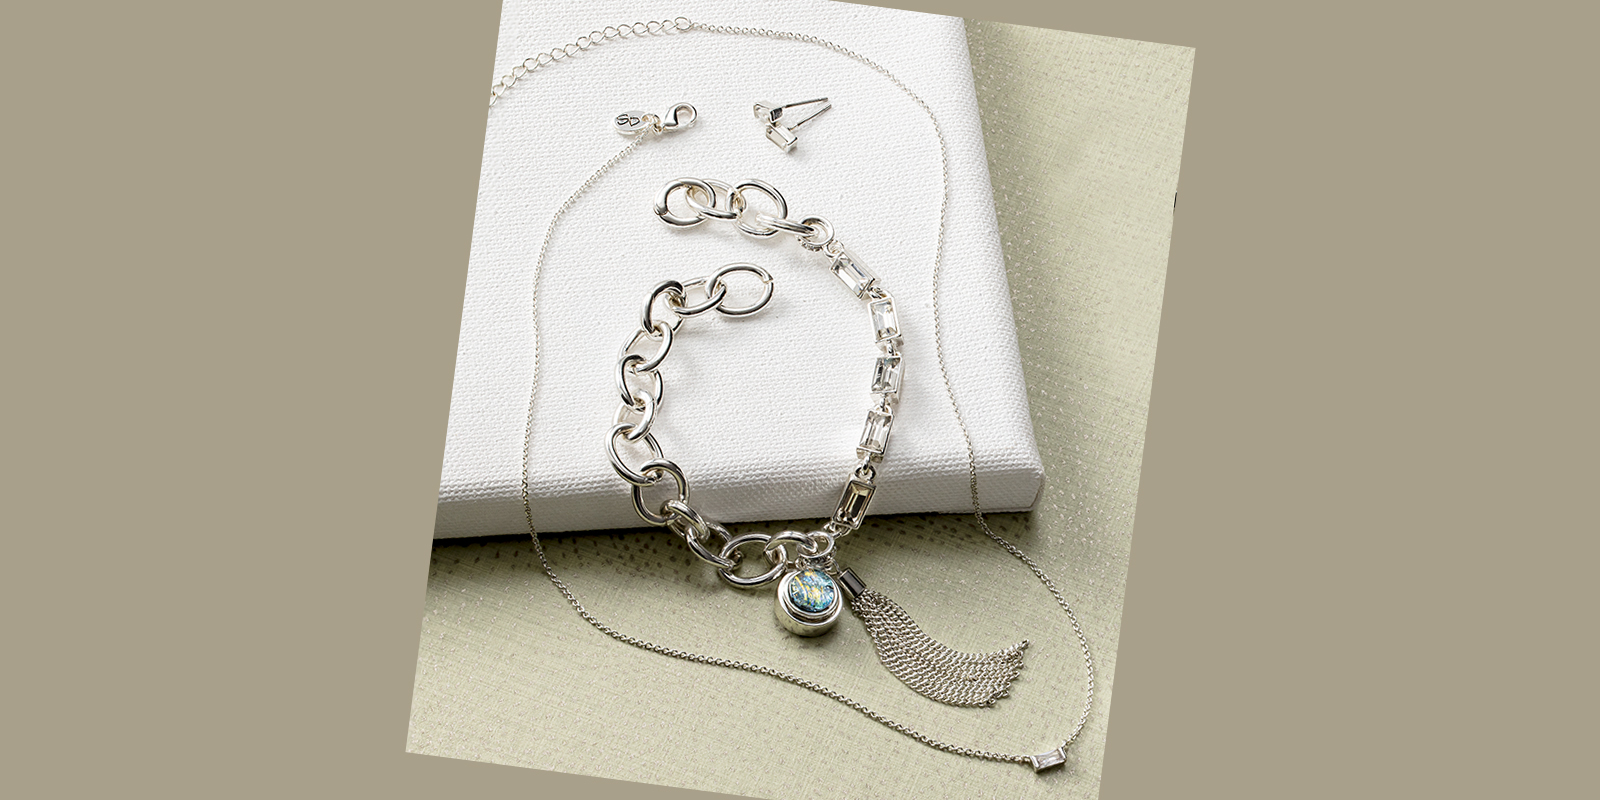 Silver tassels and minimal bracelet jewelry